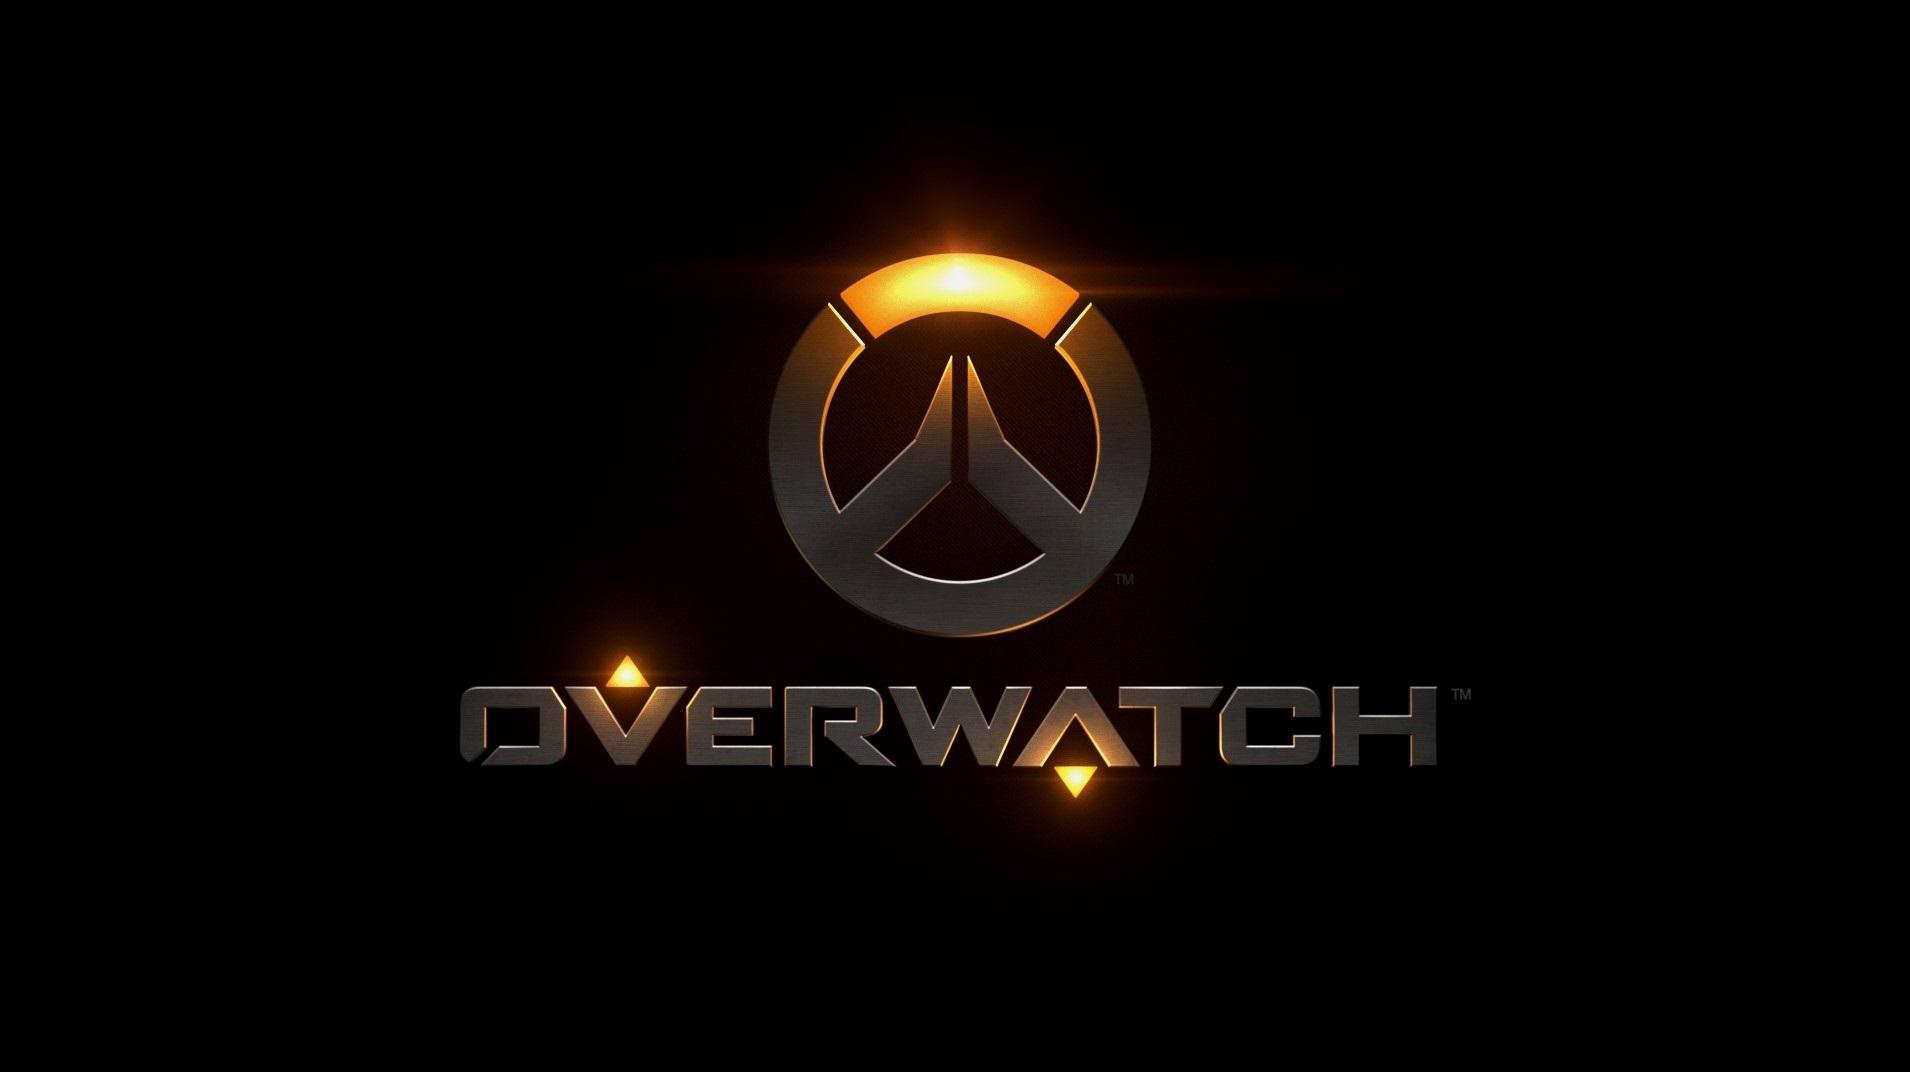 Overwatch Logo Wallpapers - Top Free Overwatch Logo Backgrounds ...